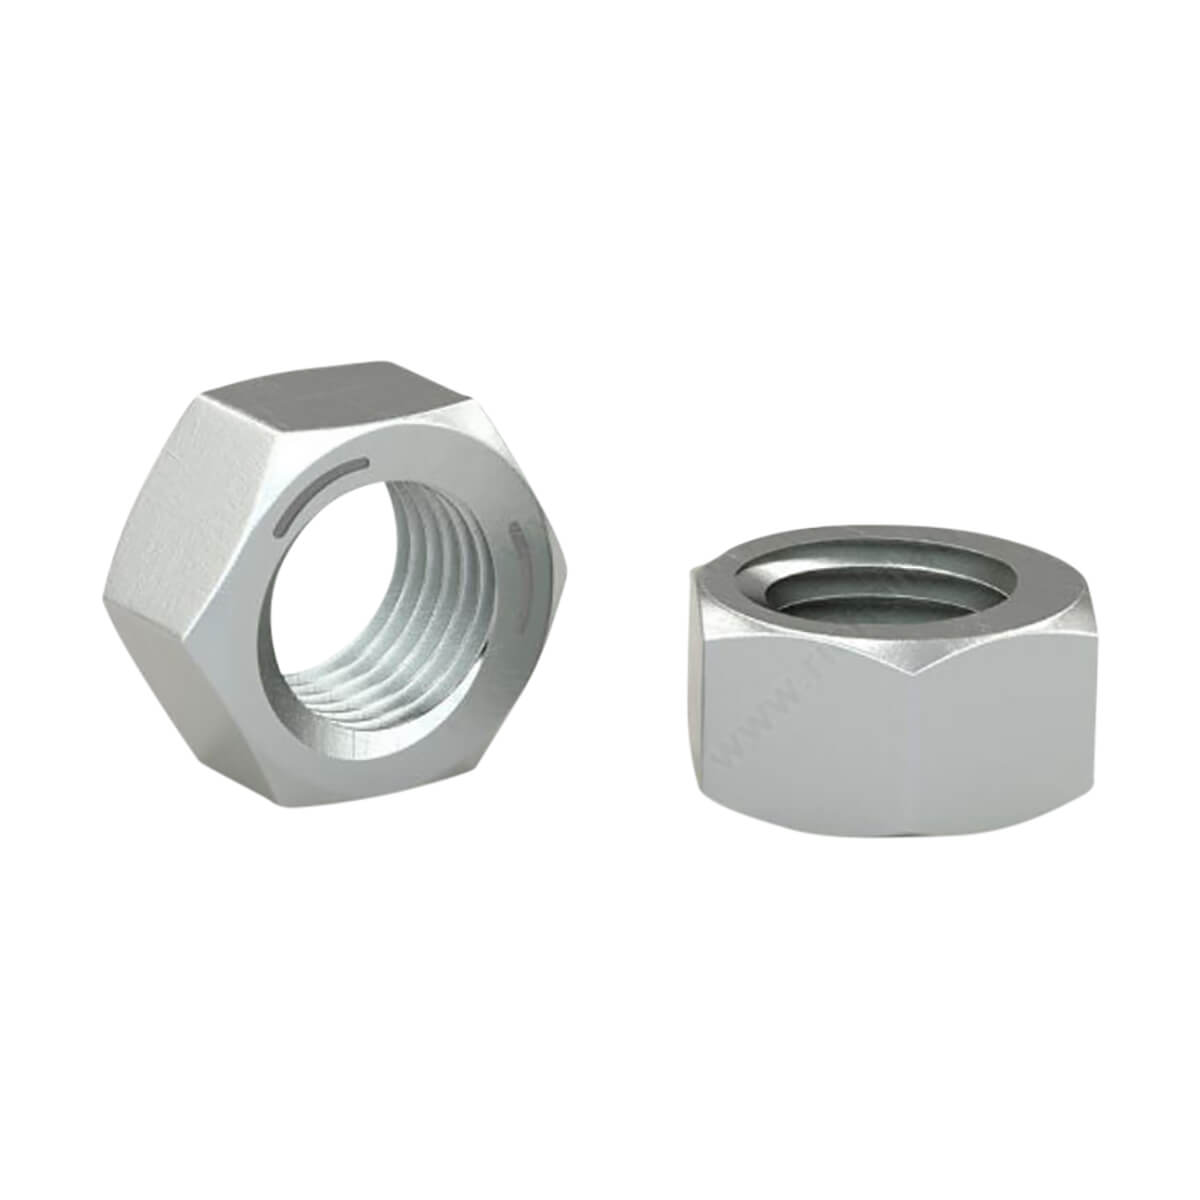 Hexagonal Nut - Grade 5 Steel - 5/16-in X 18 Pitch - 100 Pack